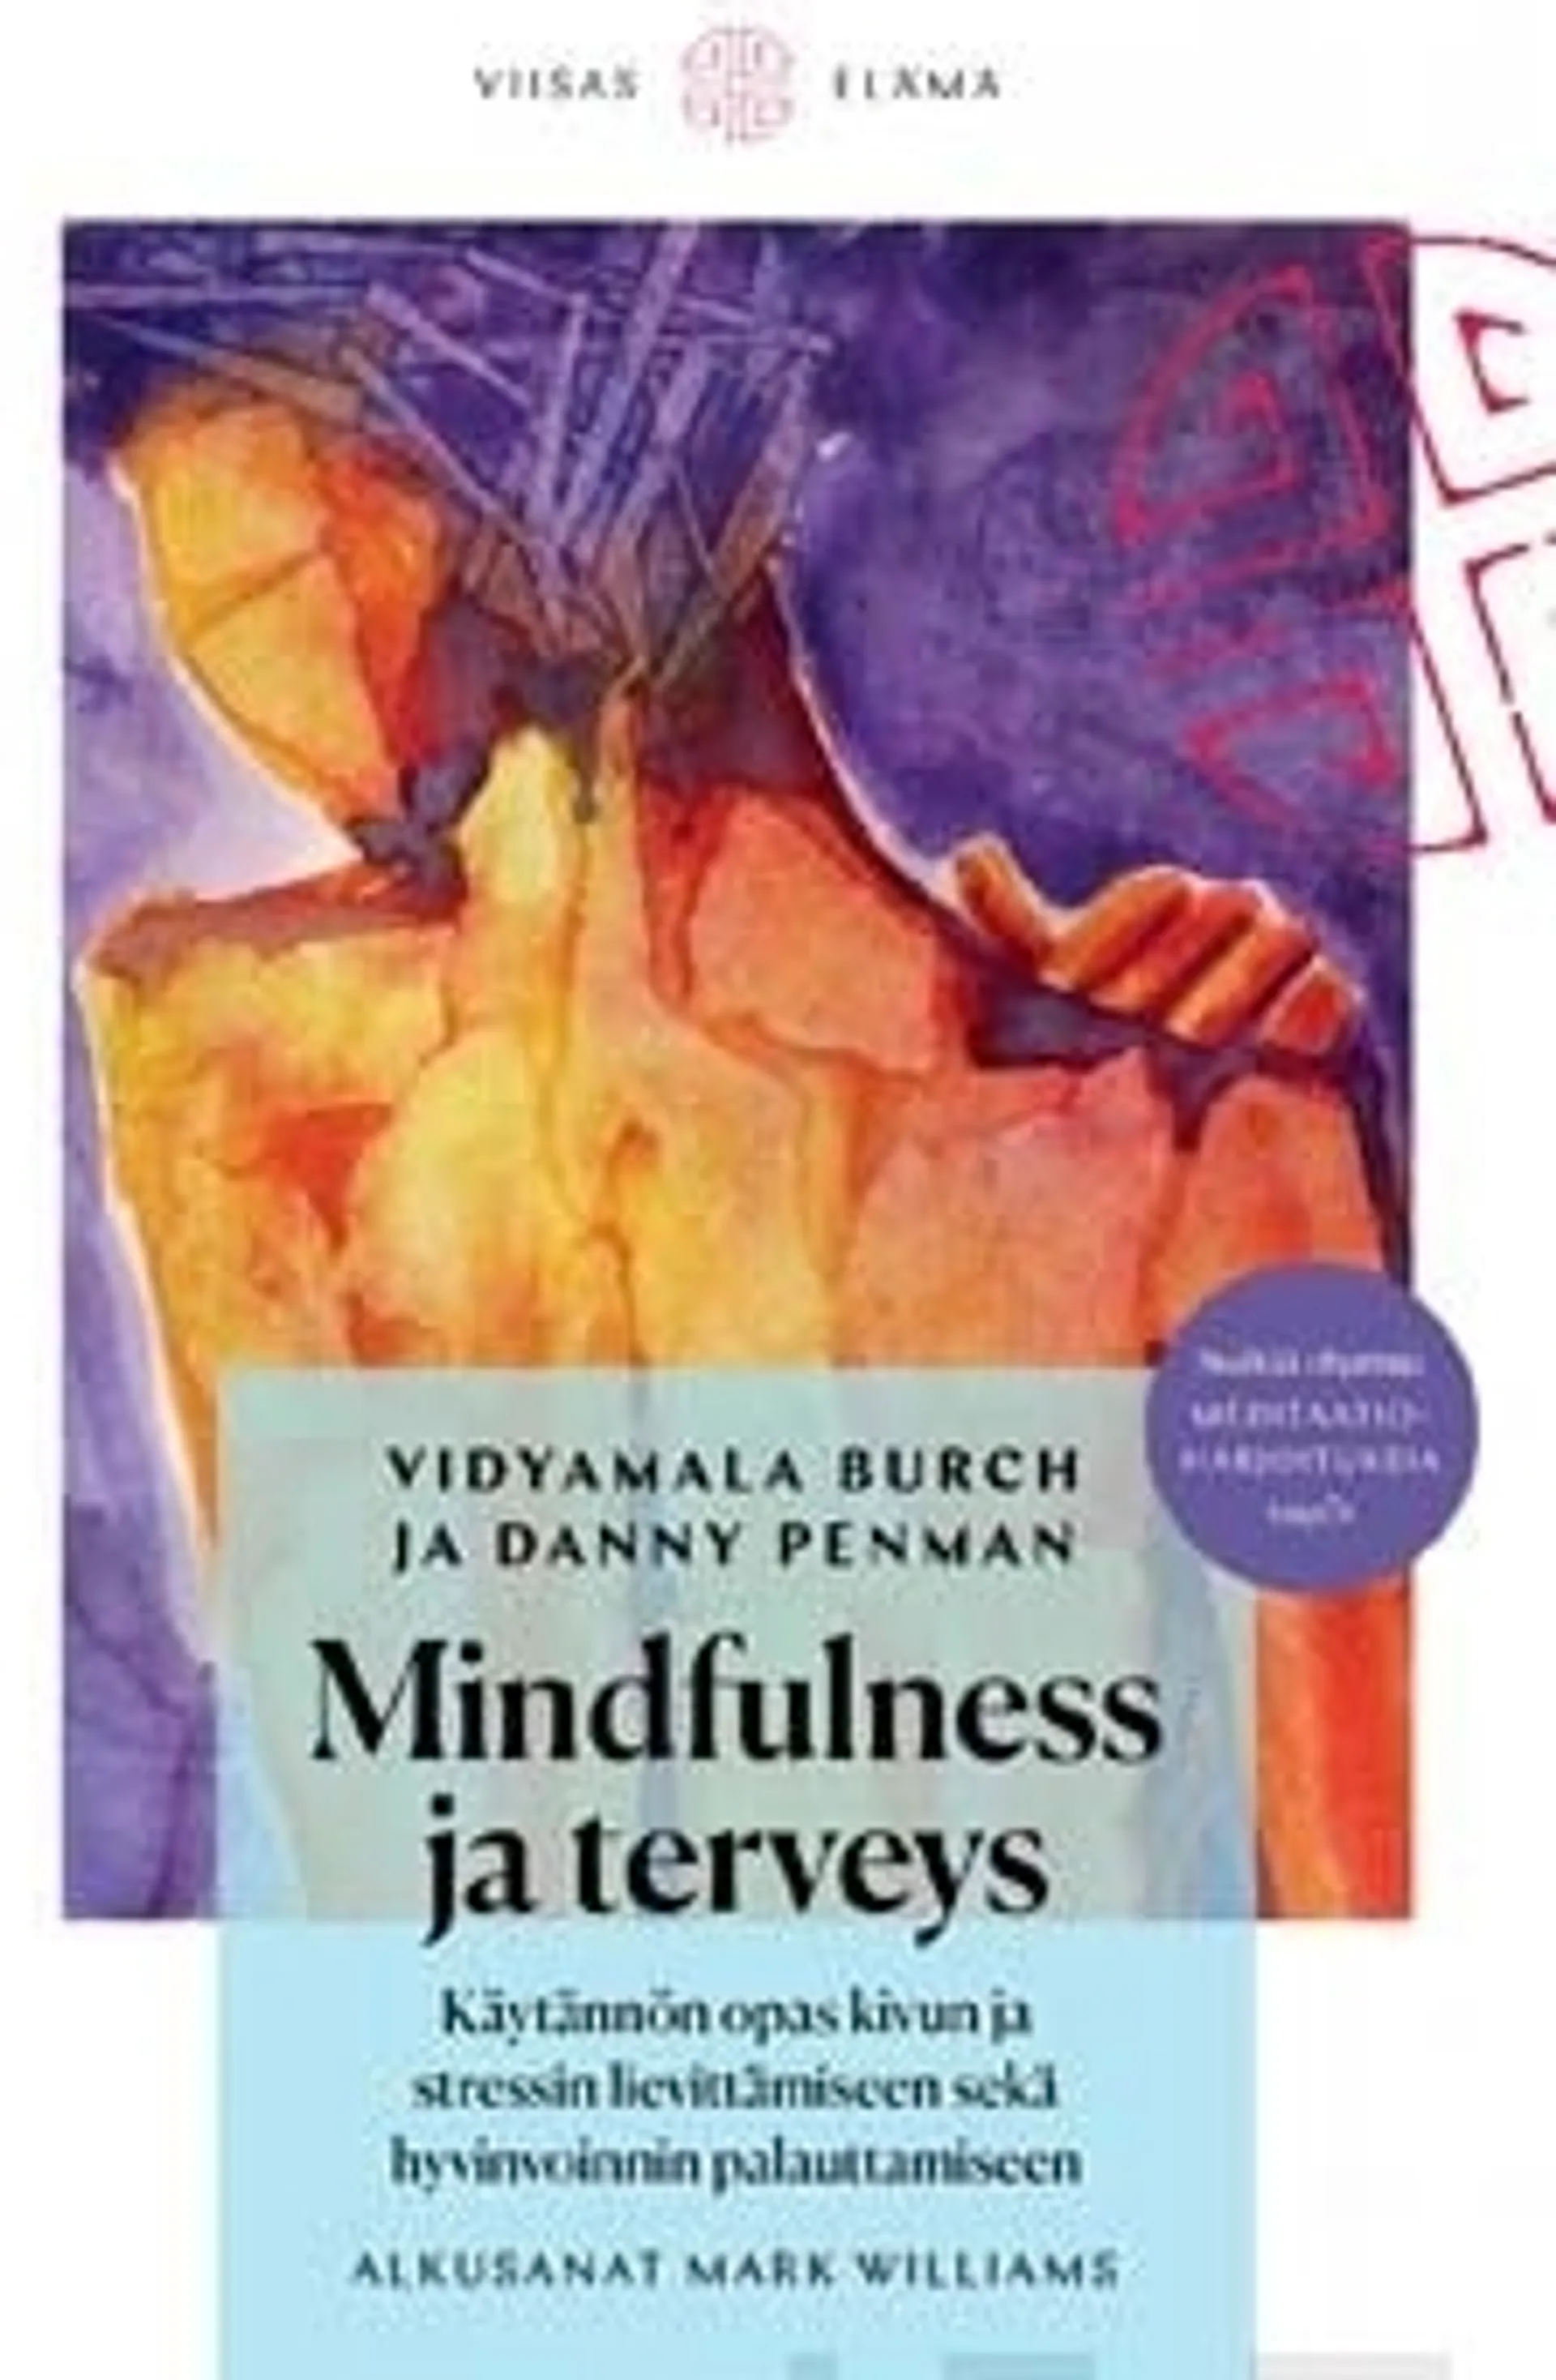 Burch, Mindfulness ja terveys